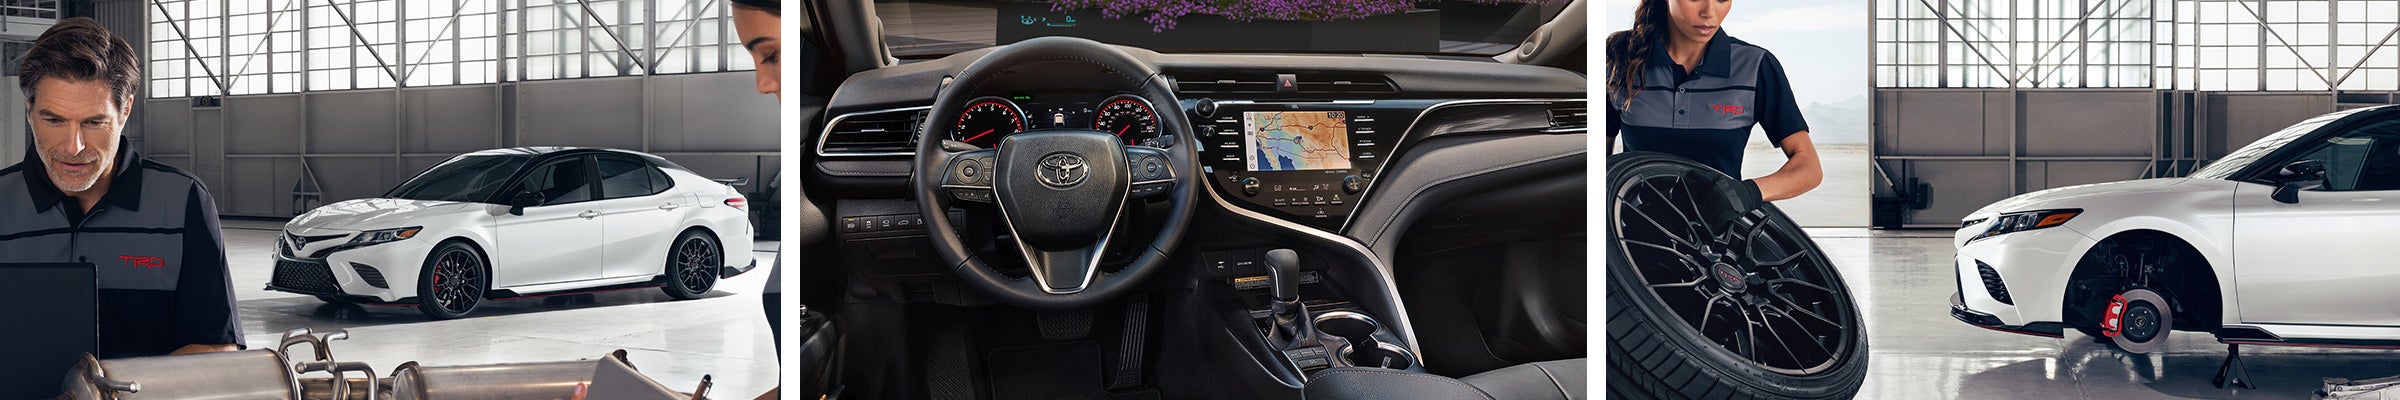 2020 Toyota Camry Hybrid For Sale Philadelphia PA | Ardmore